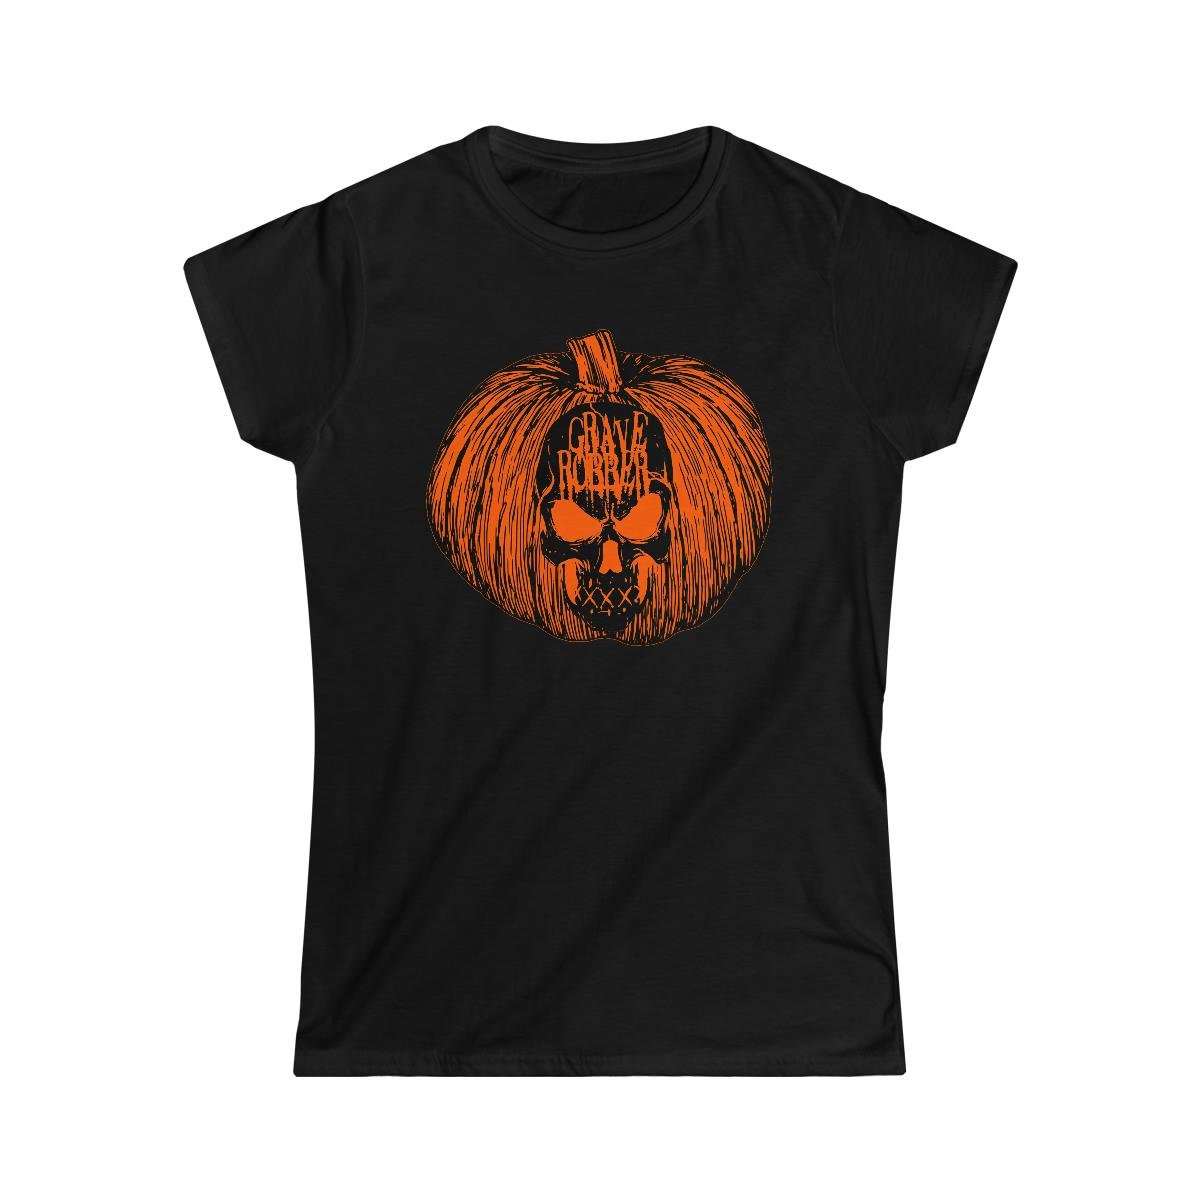 Grave Robber Pumpkin Limited Edition Women’s Tshirt